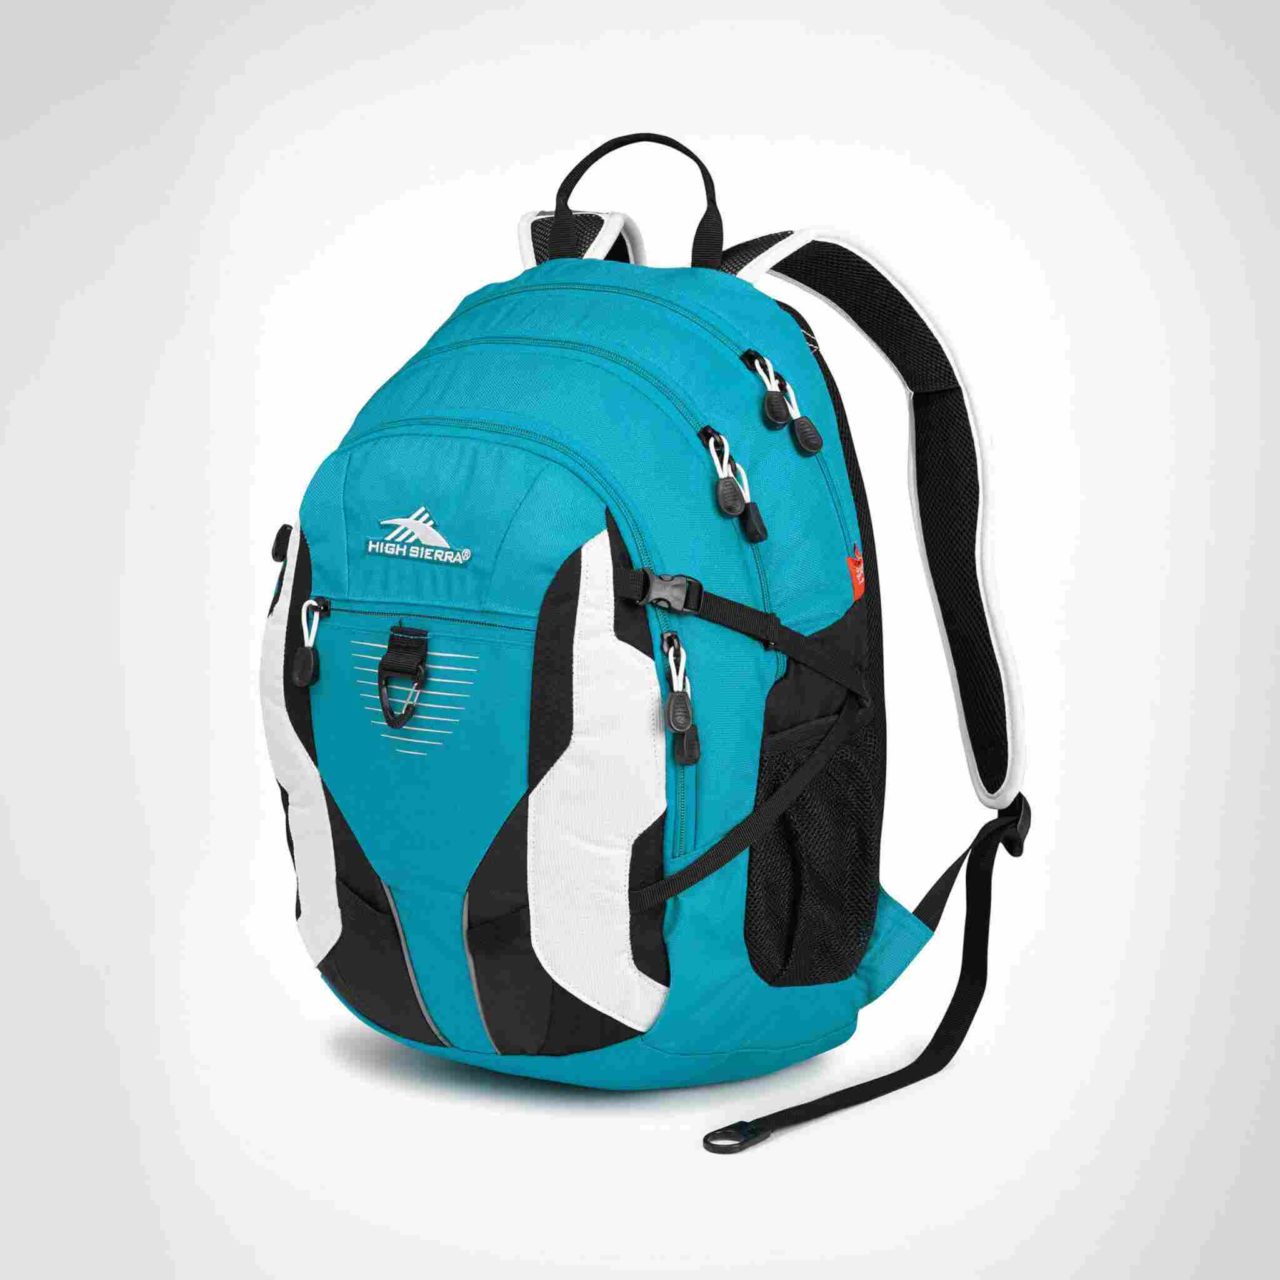 product-backpack-light-blue-1280x1280.jpg